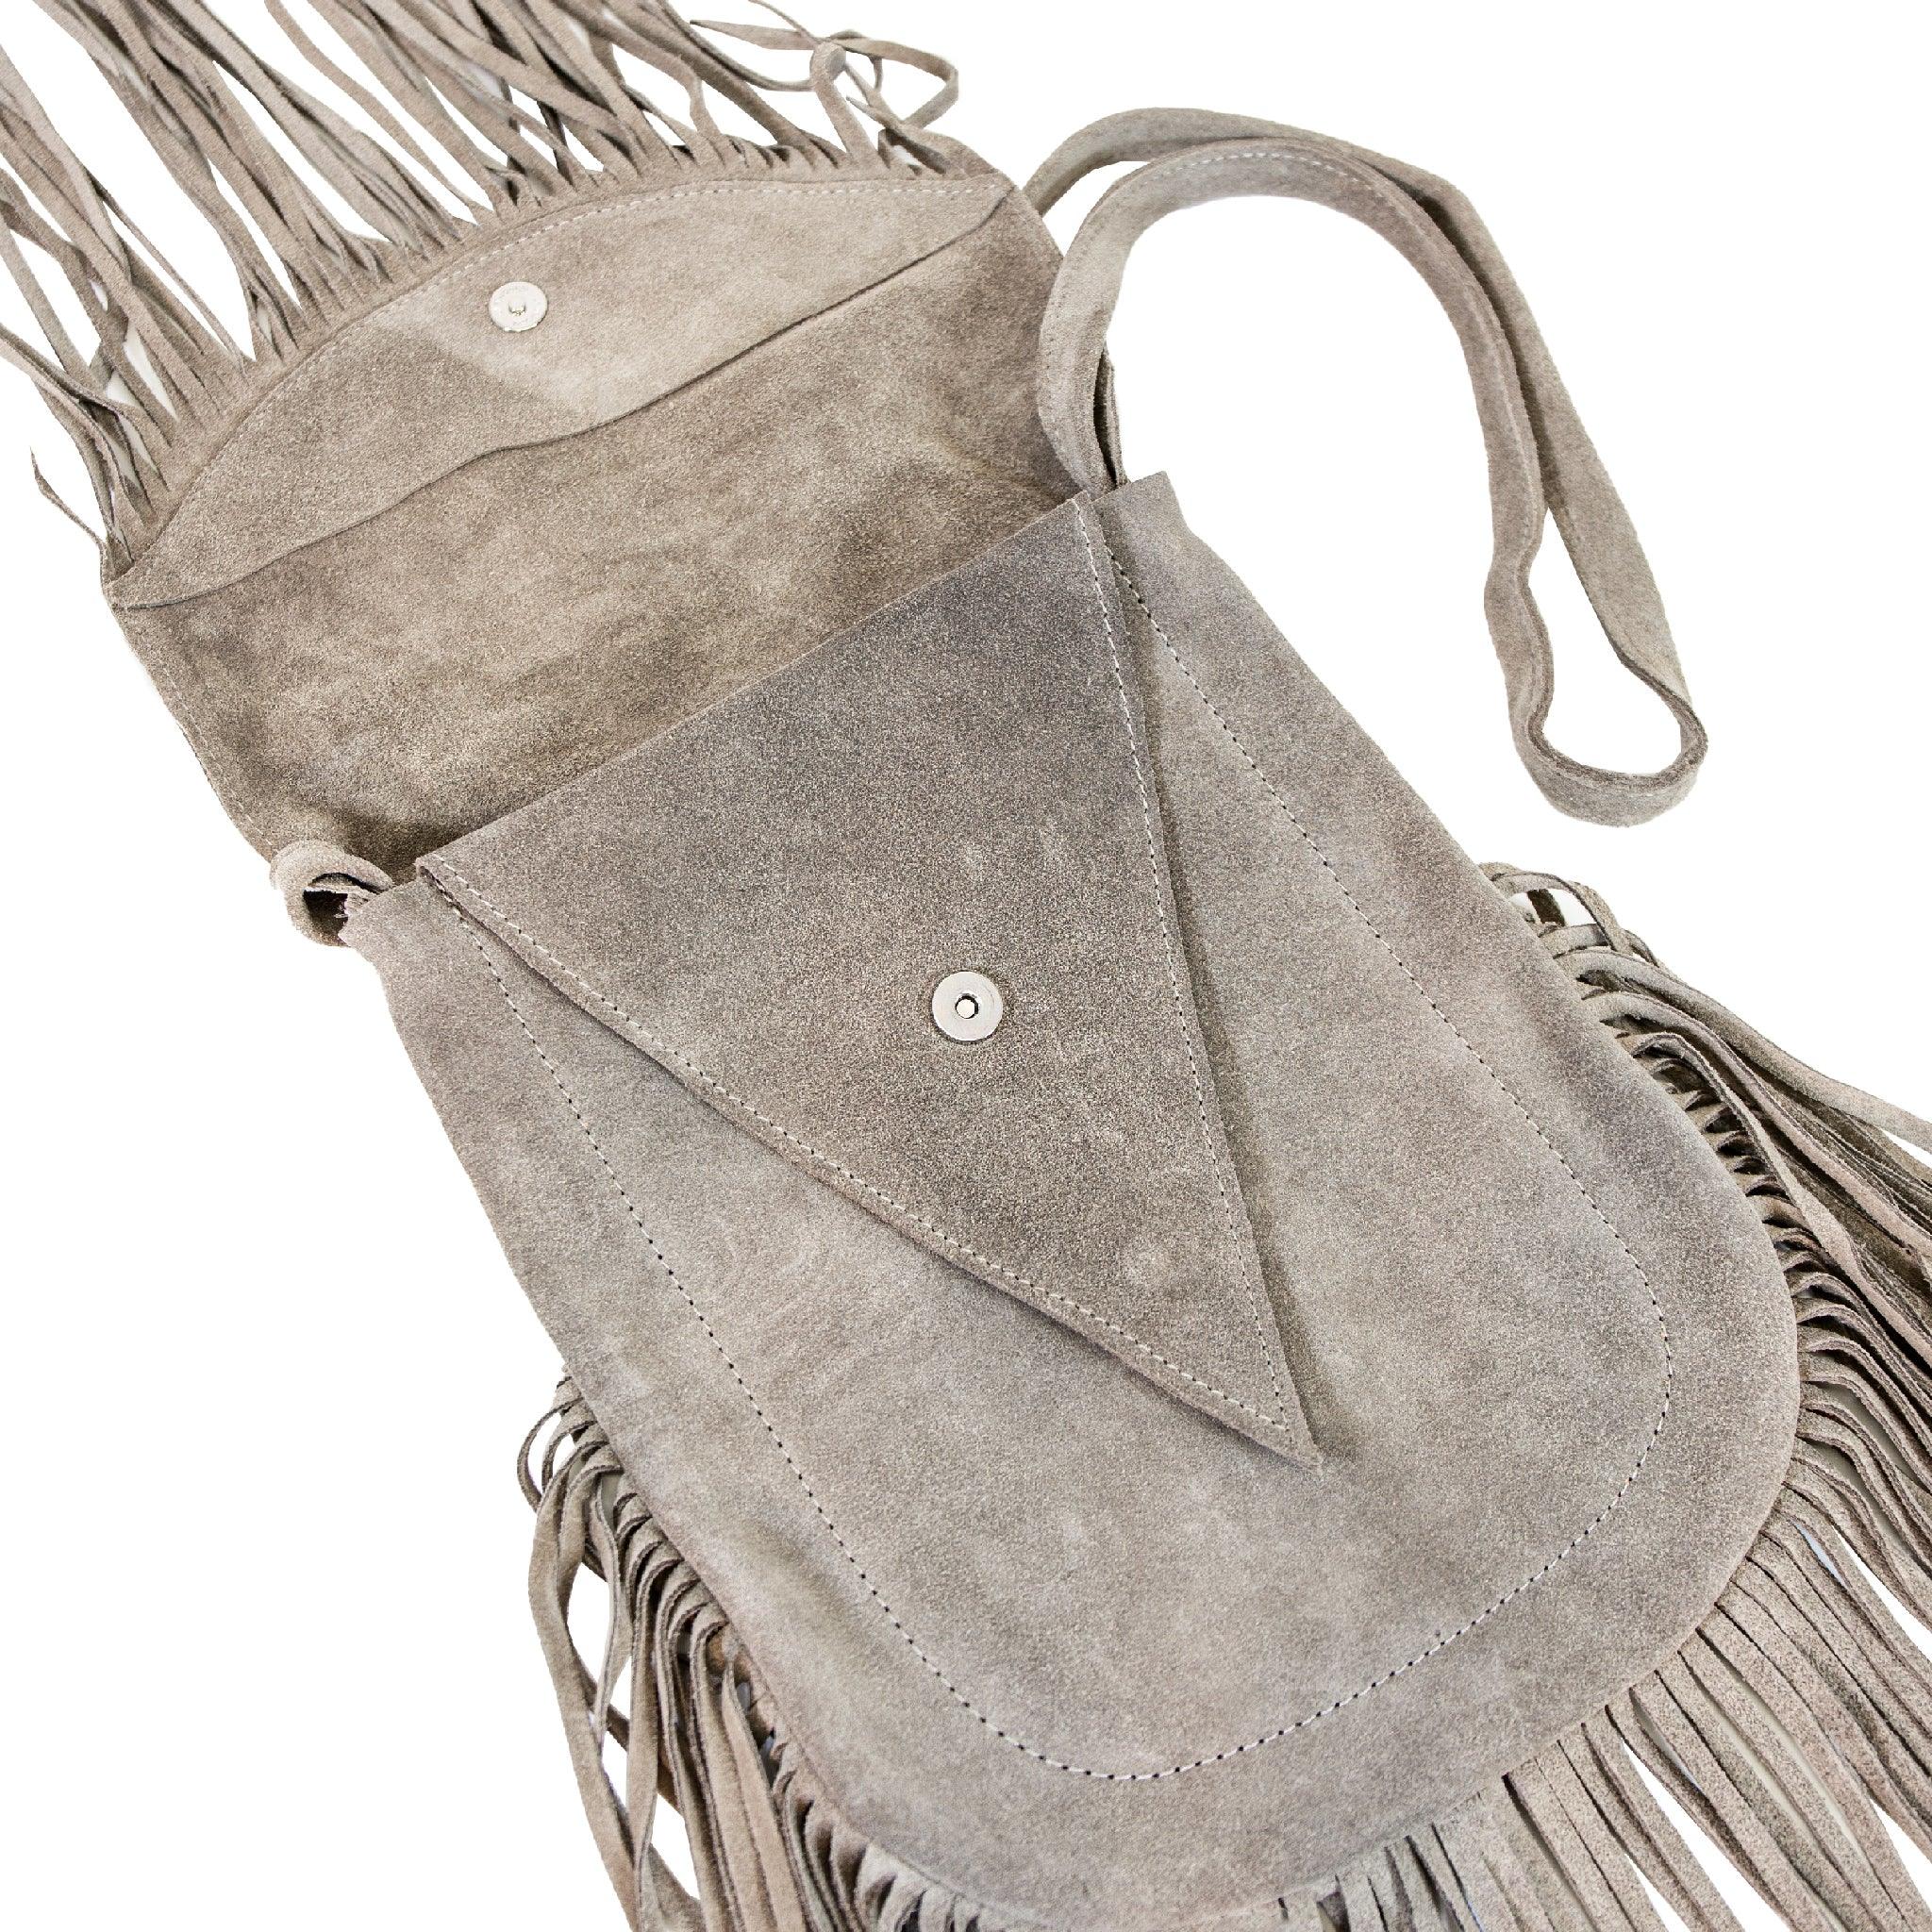 Full Grain Leather Boho Bag / Hippie Leather Bag for Women in Brown Color / Crossbody Bag / Street Shoulder Bag / Anniversary Gift